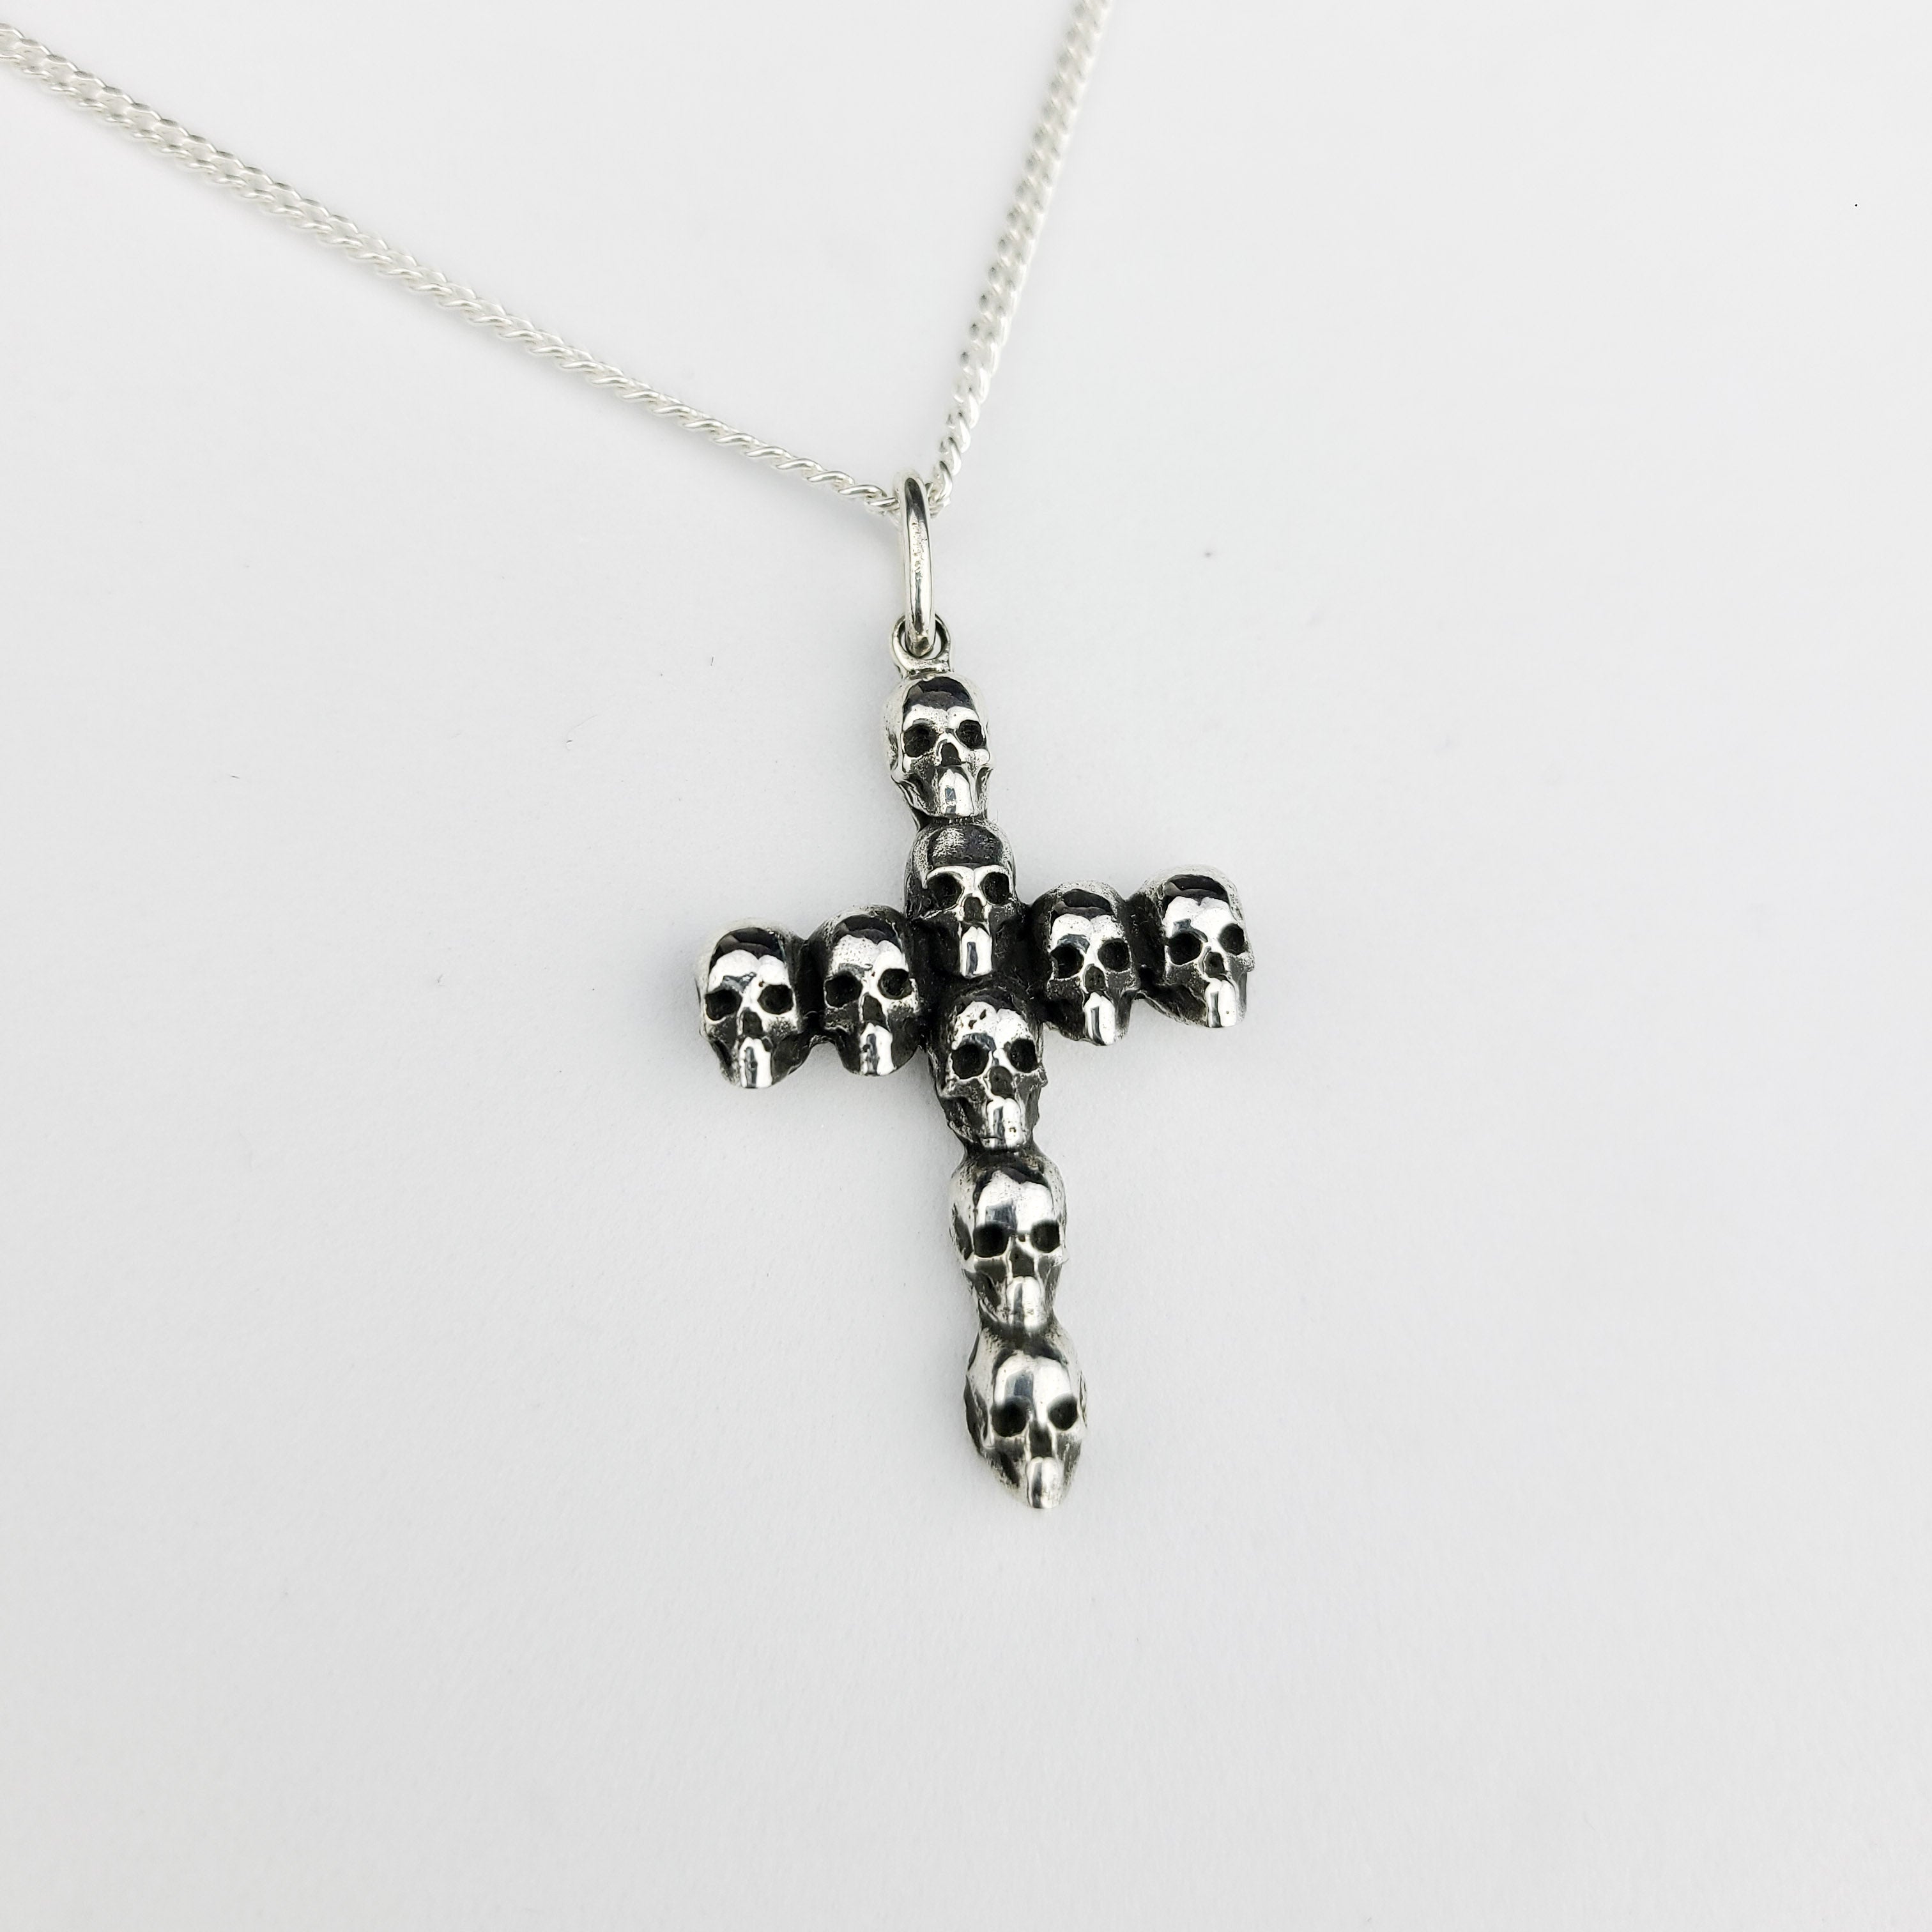 Emo Skull Cross Pendant Necklace